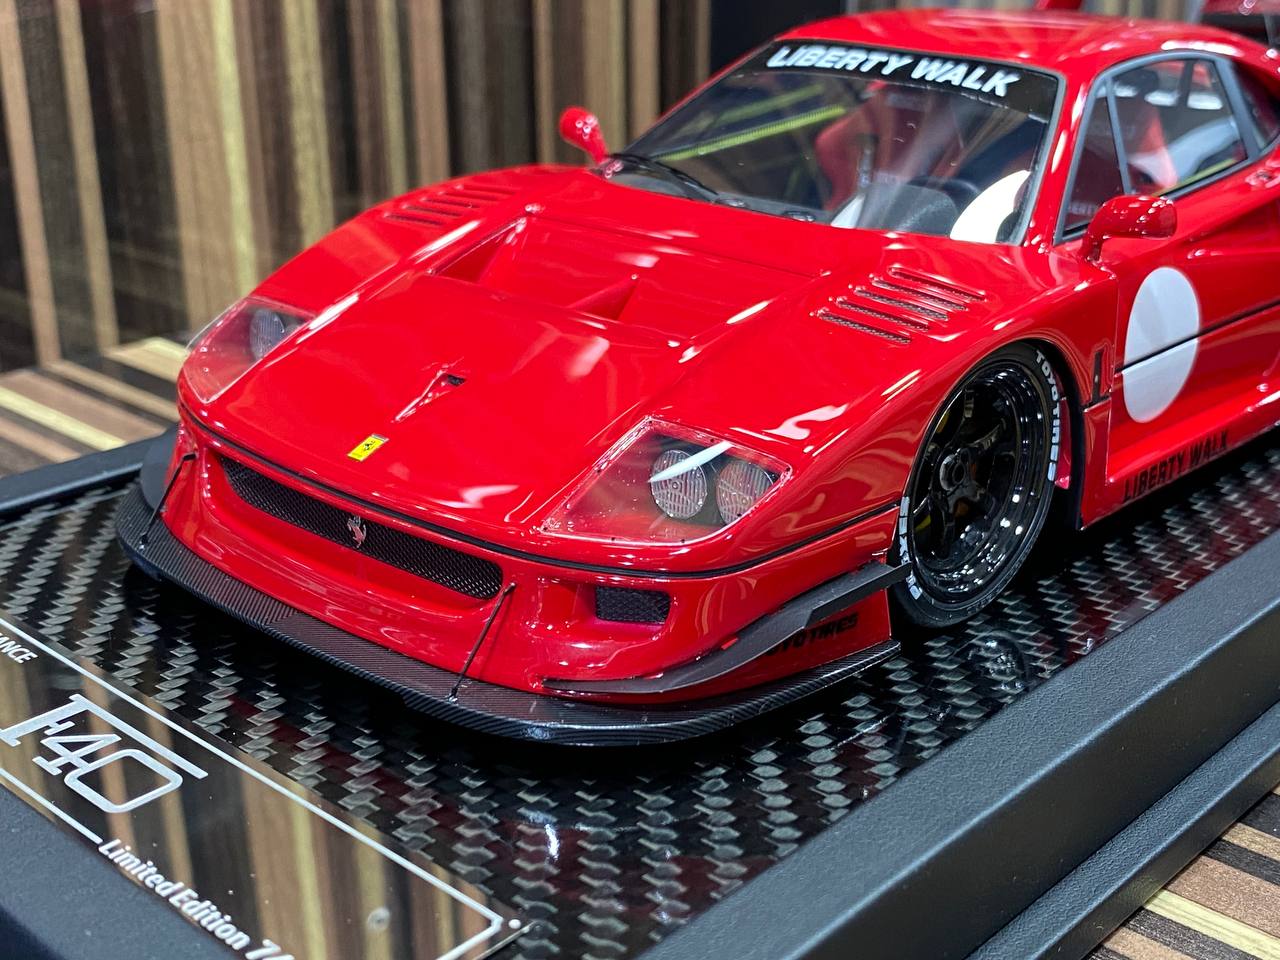 1/18 Ferrari F40 LB Performance Red by VIP Models|Sold in Dturman.com Dubai UAE.